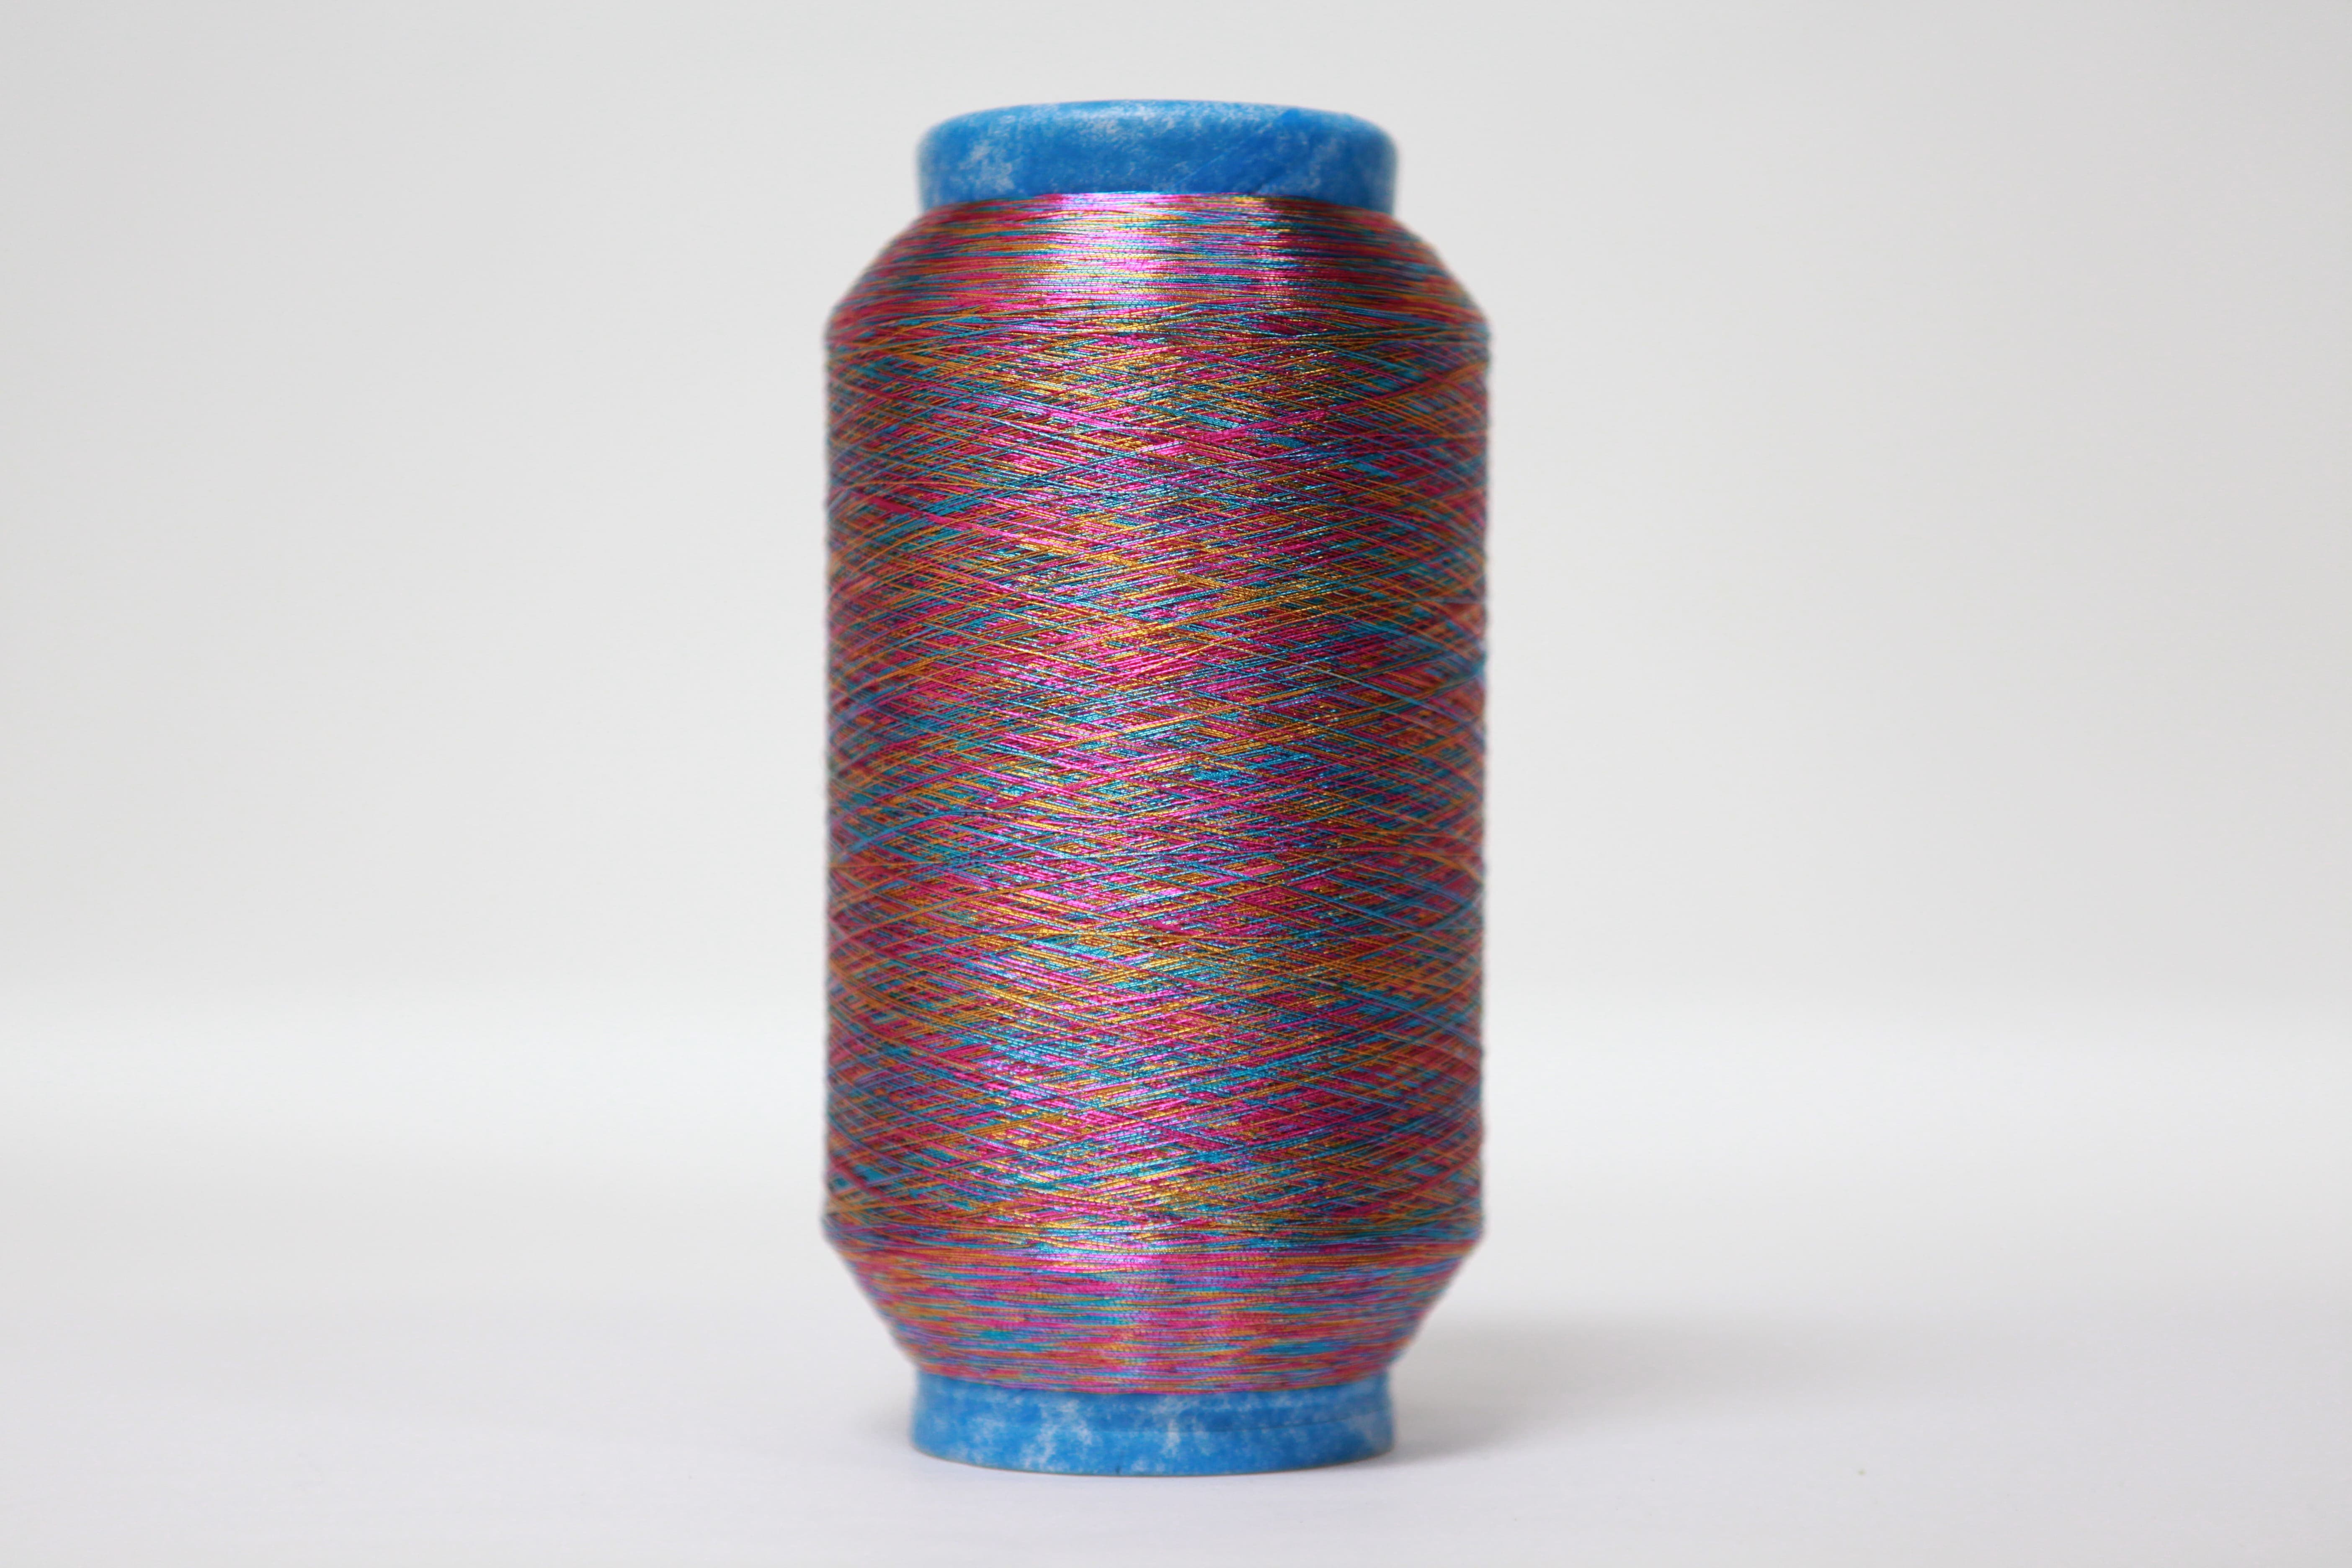 metallic yarn hs code